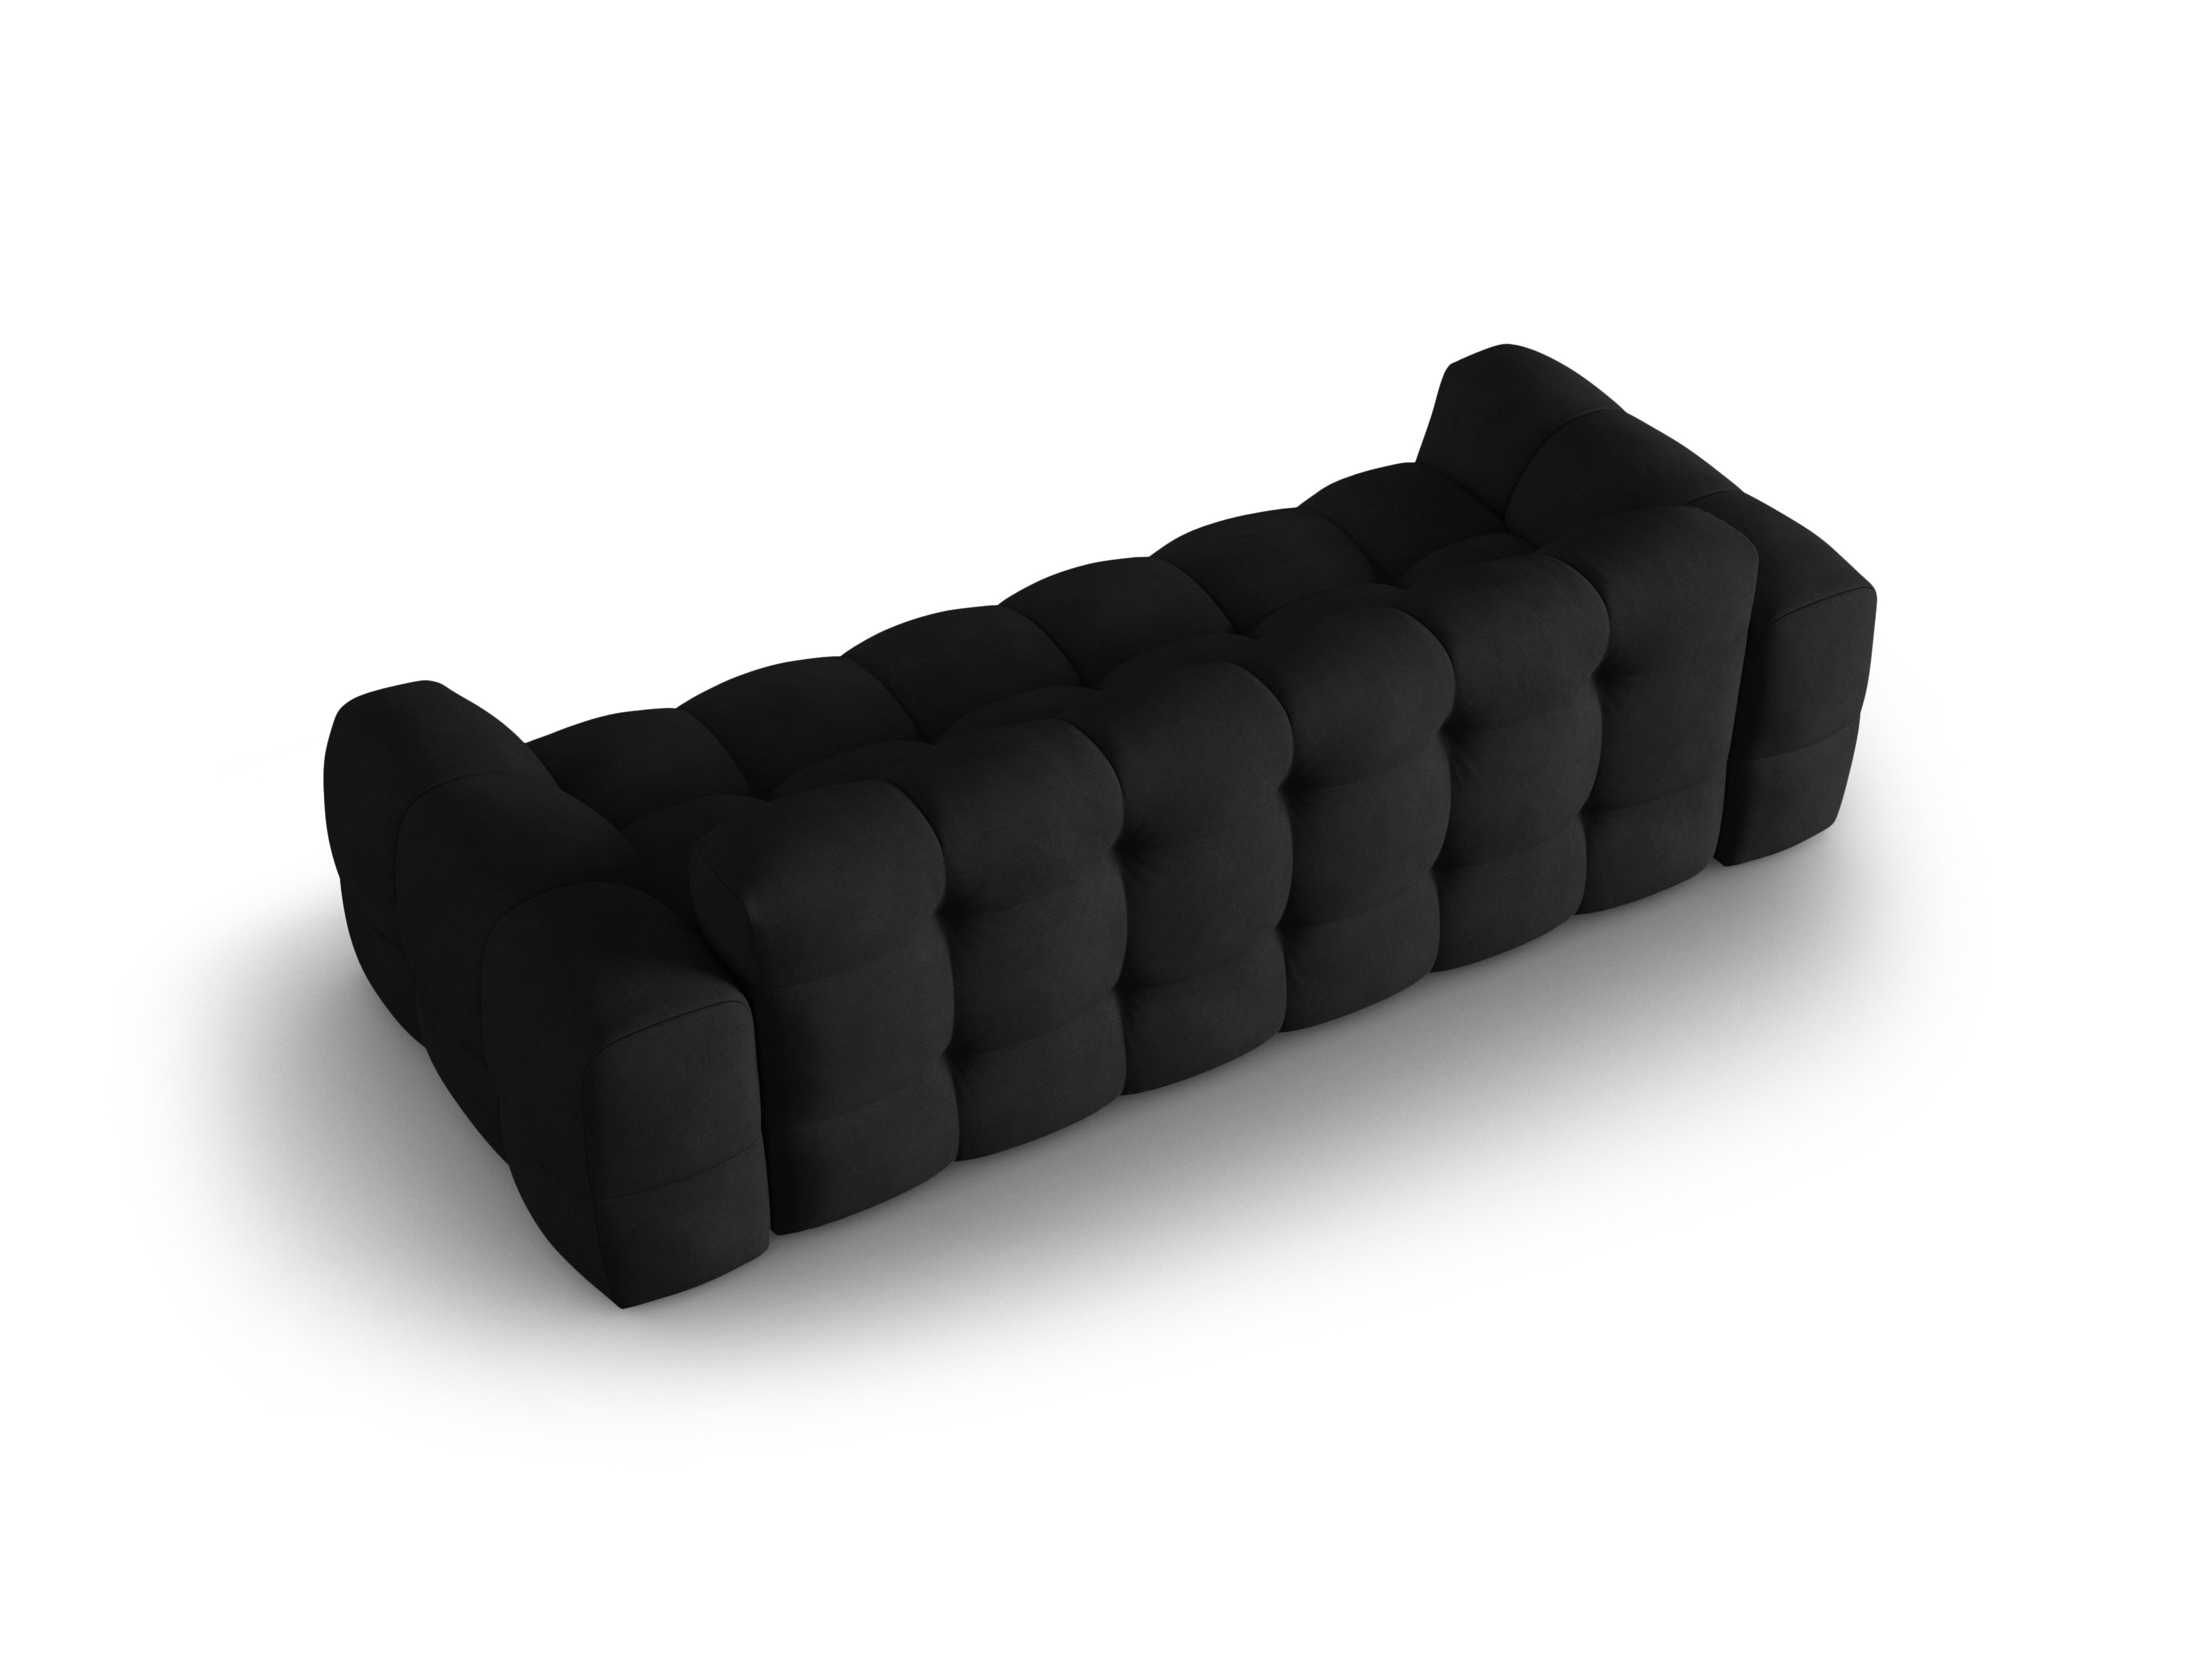 Sofa, "Nino", 3 Seats, 236x105x68
Made in Europe, Maison Heritage, Eye on Design